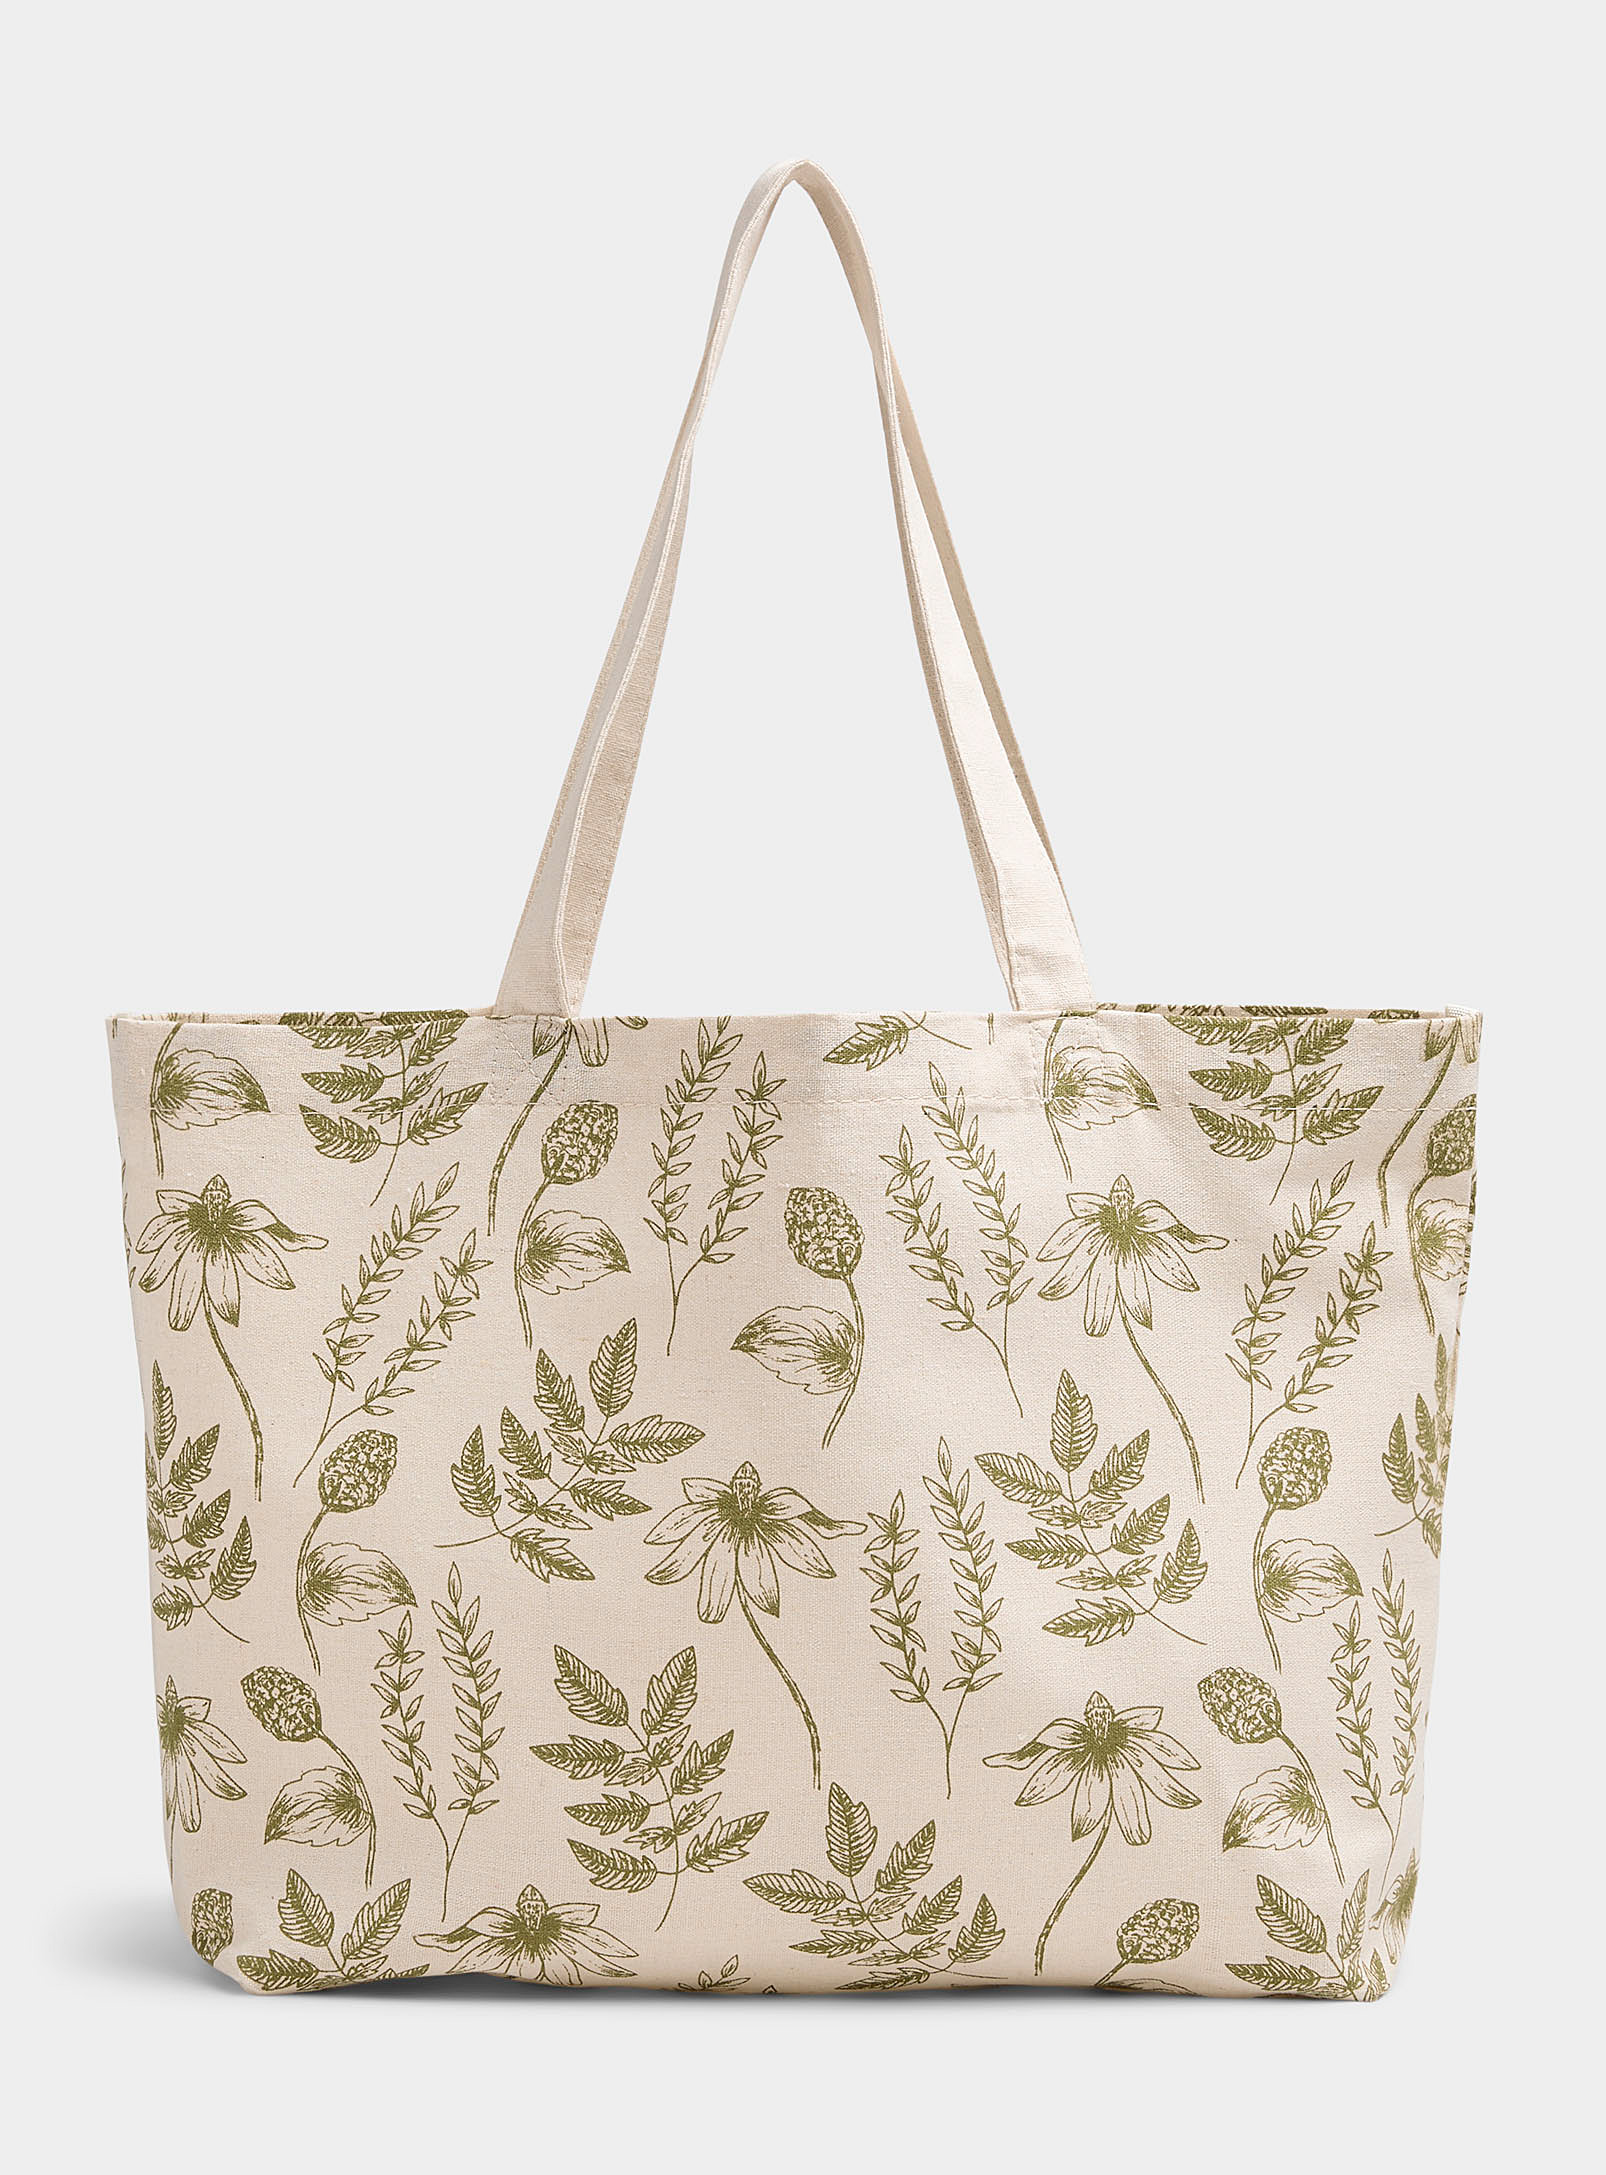 Simons - Women's Dainty herbs Tote Bag